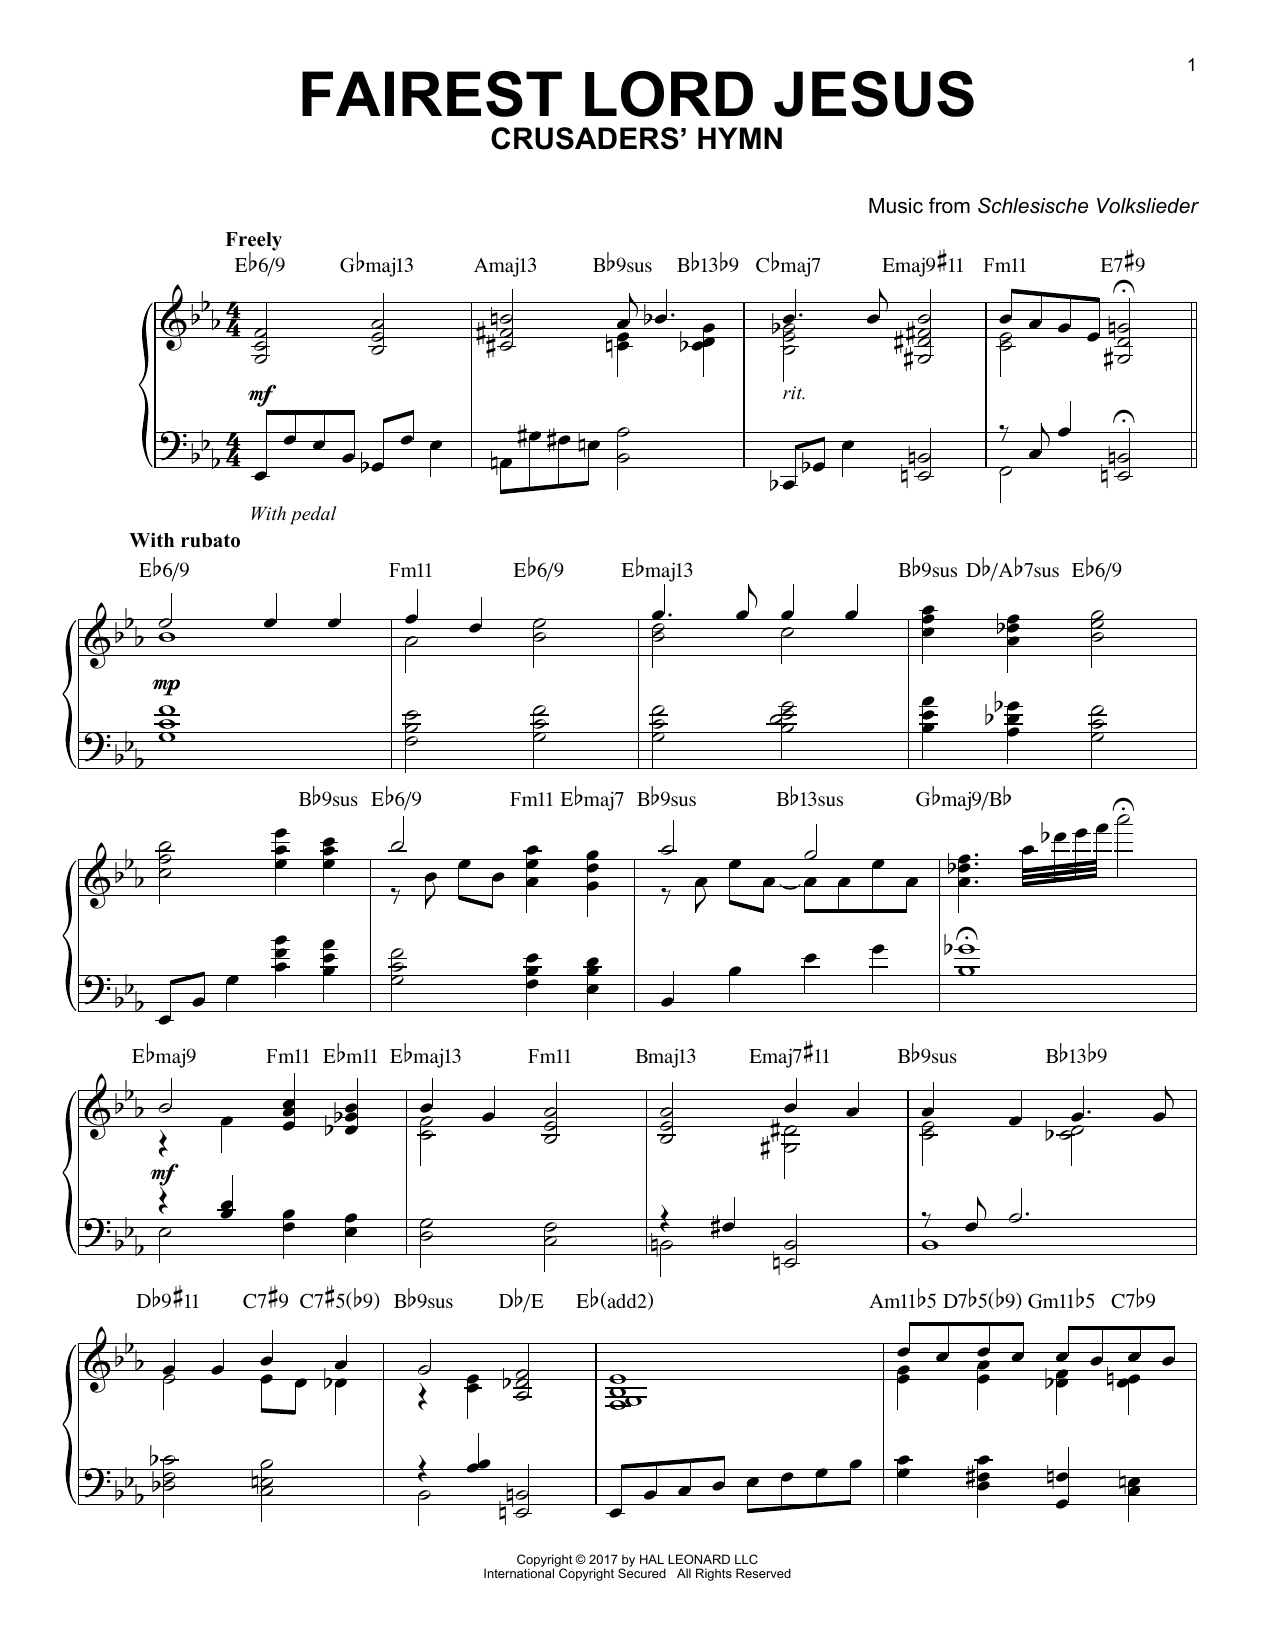 Schlesische Volkslieder Fairest Lord Jesus [Jazz version] Sheet Music Notes & Chords for Piano - Download or Print PDF